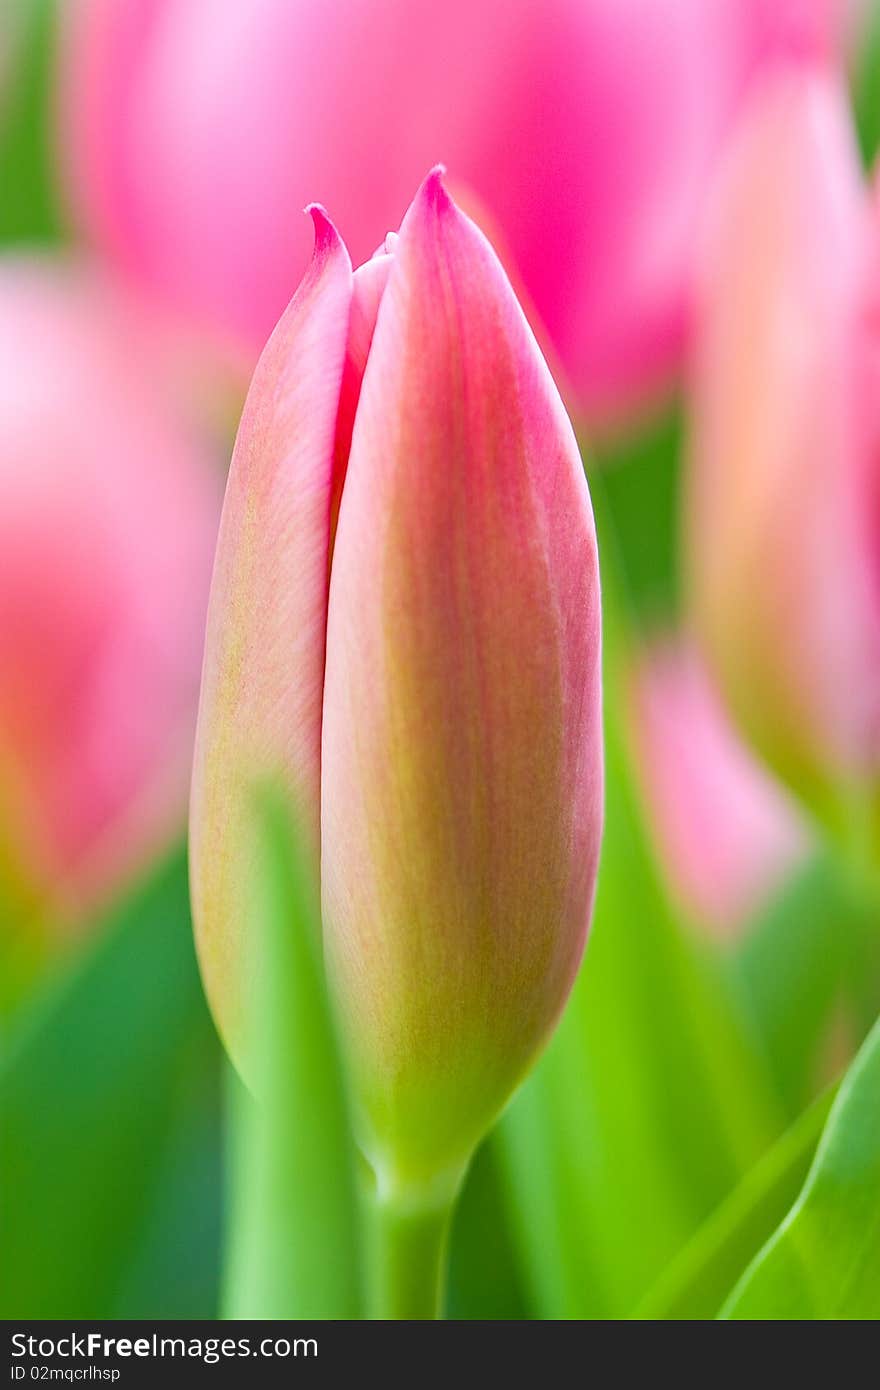 Tulip close up and macro